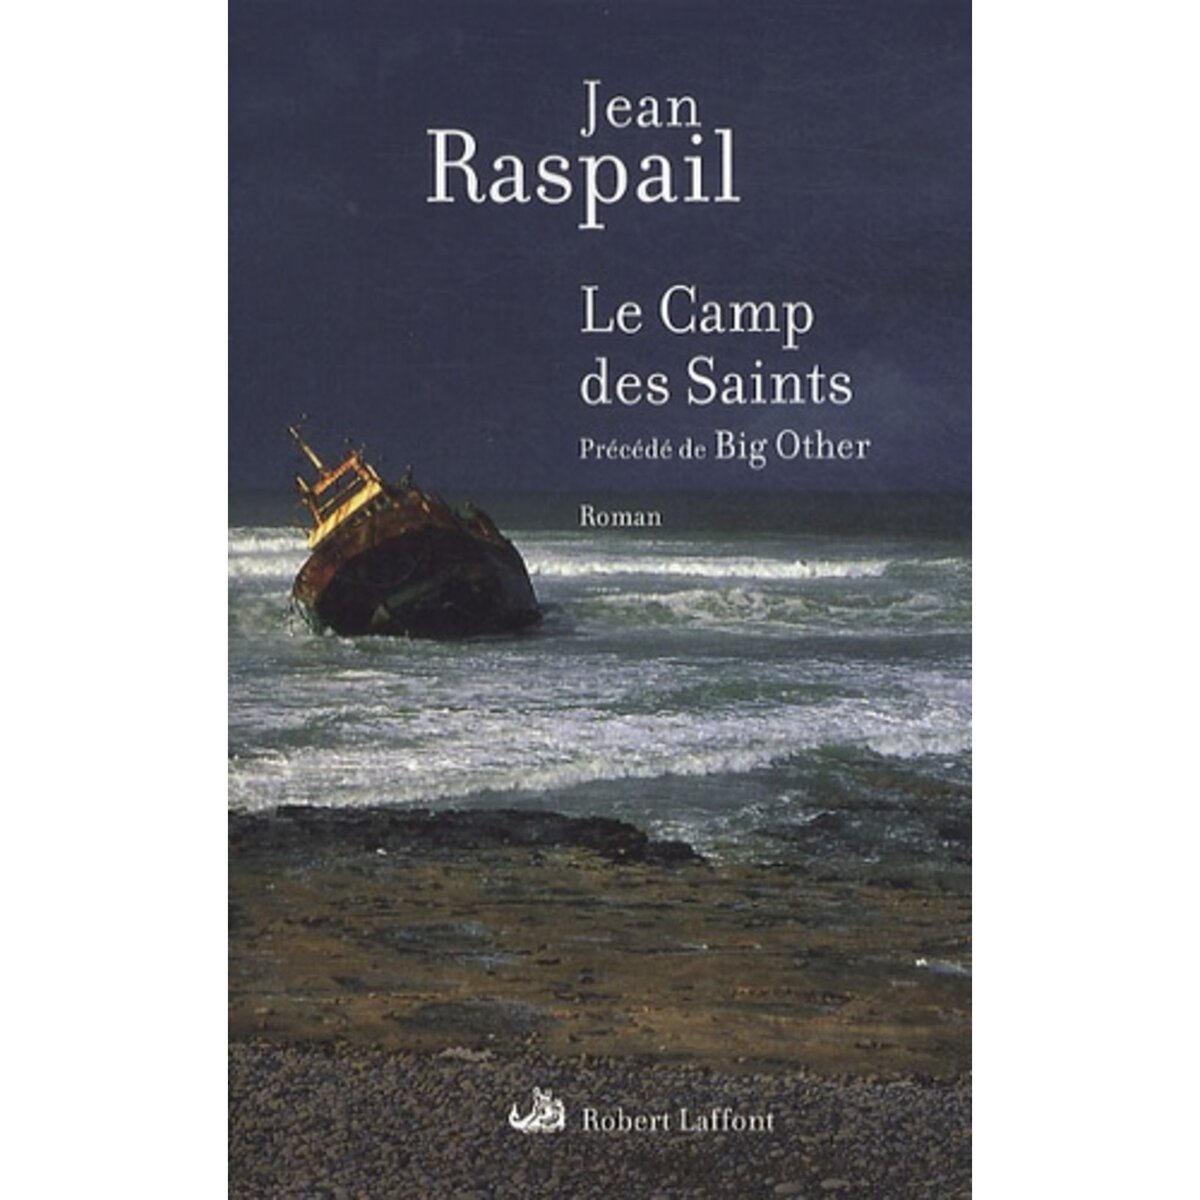  LE CAMP DES SAINTS, Raspail Jean